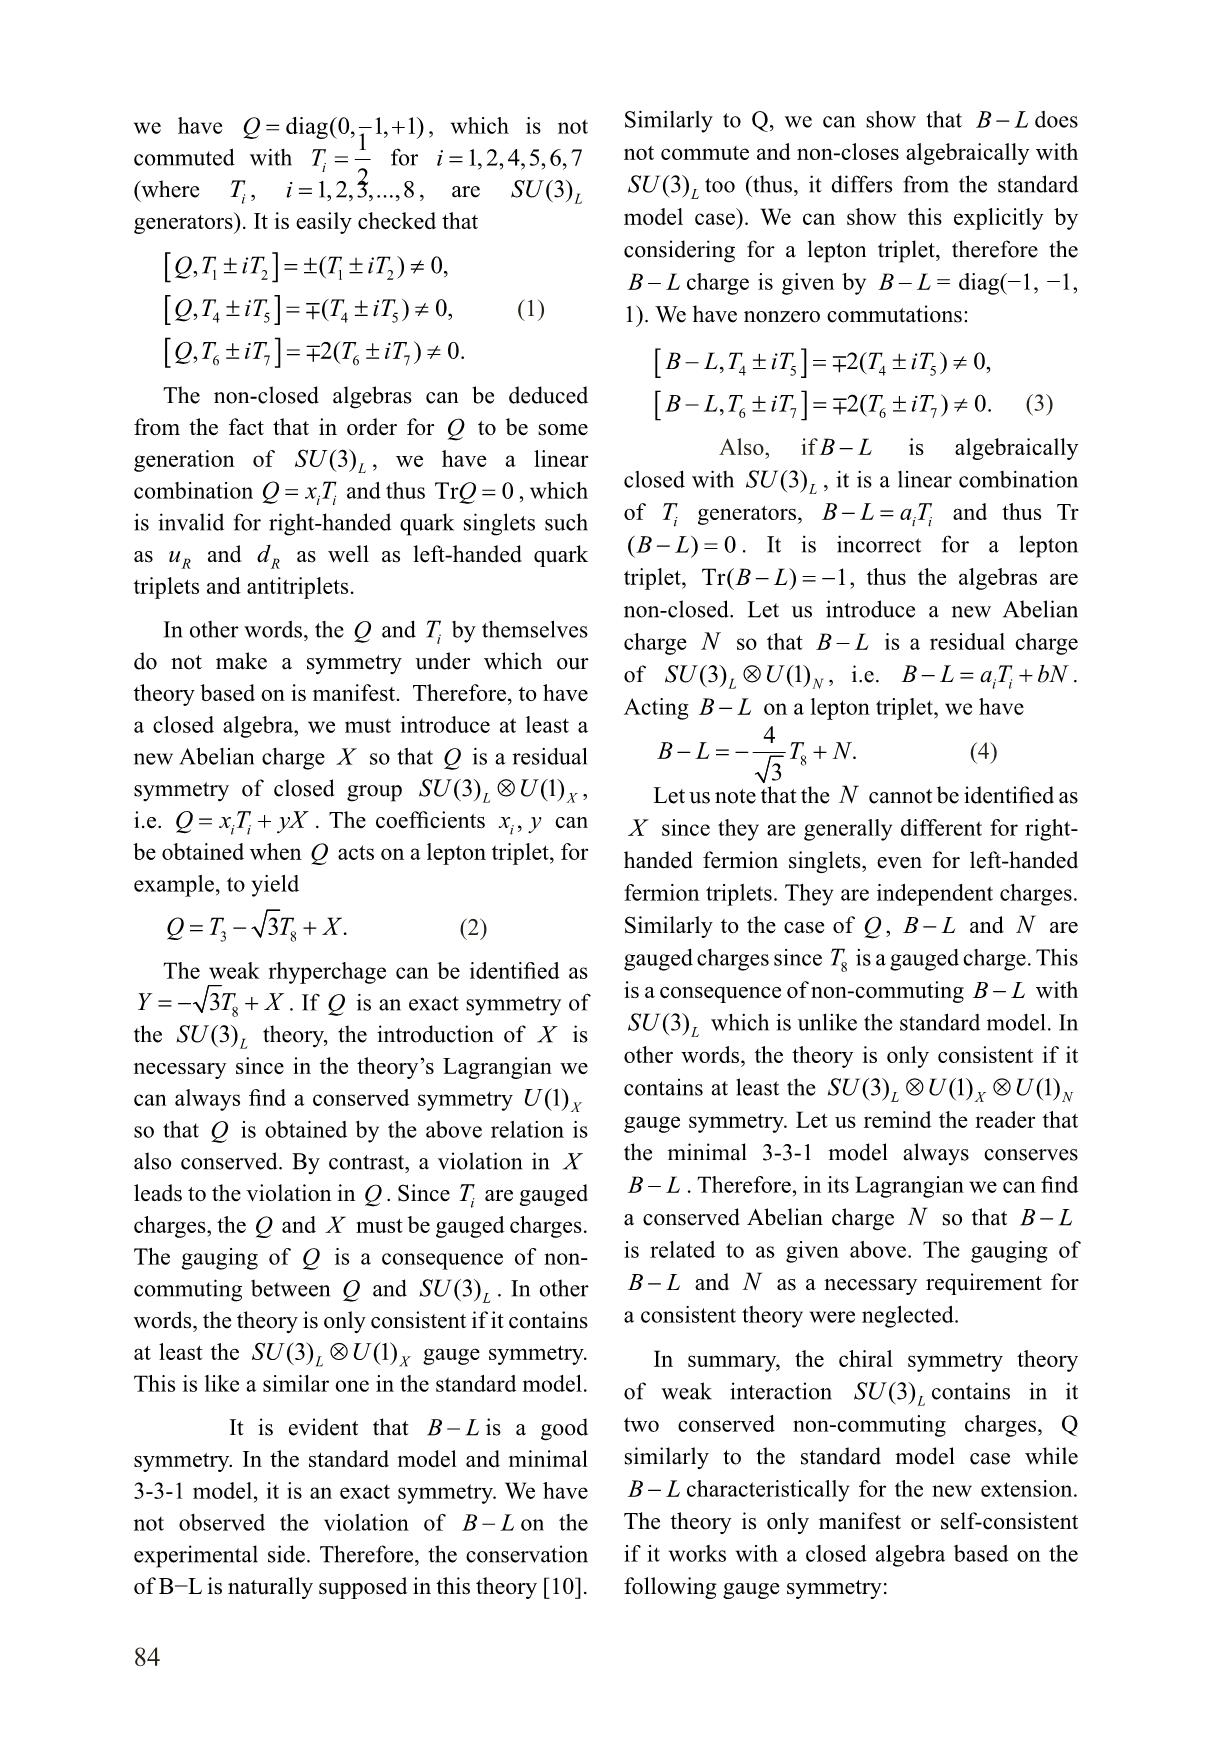 Ark matter in minimal 3-3-1-1 model trang 3